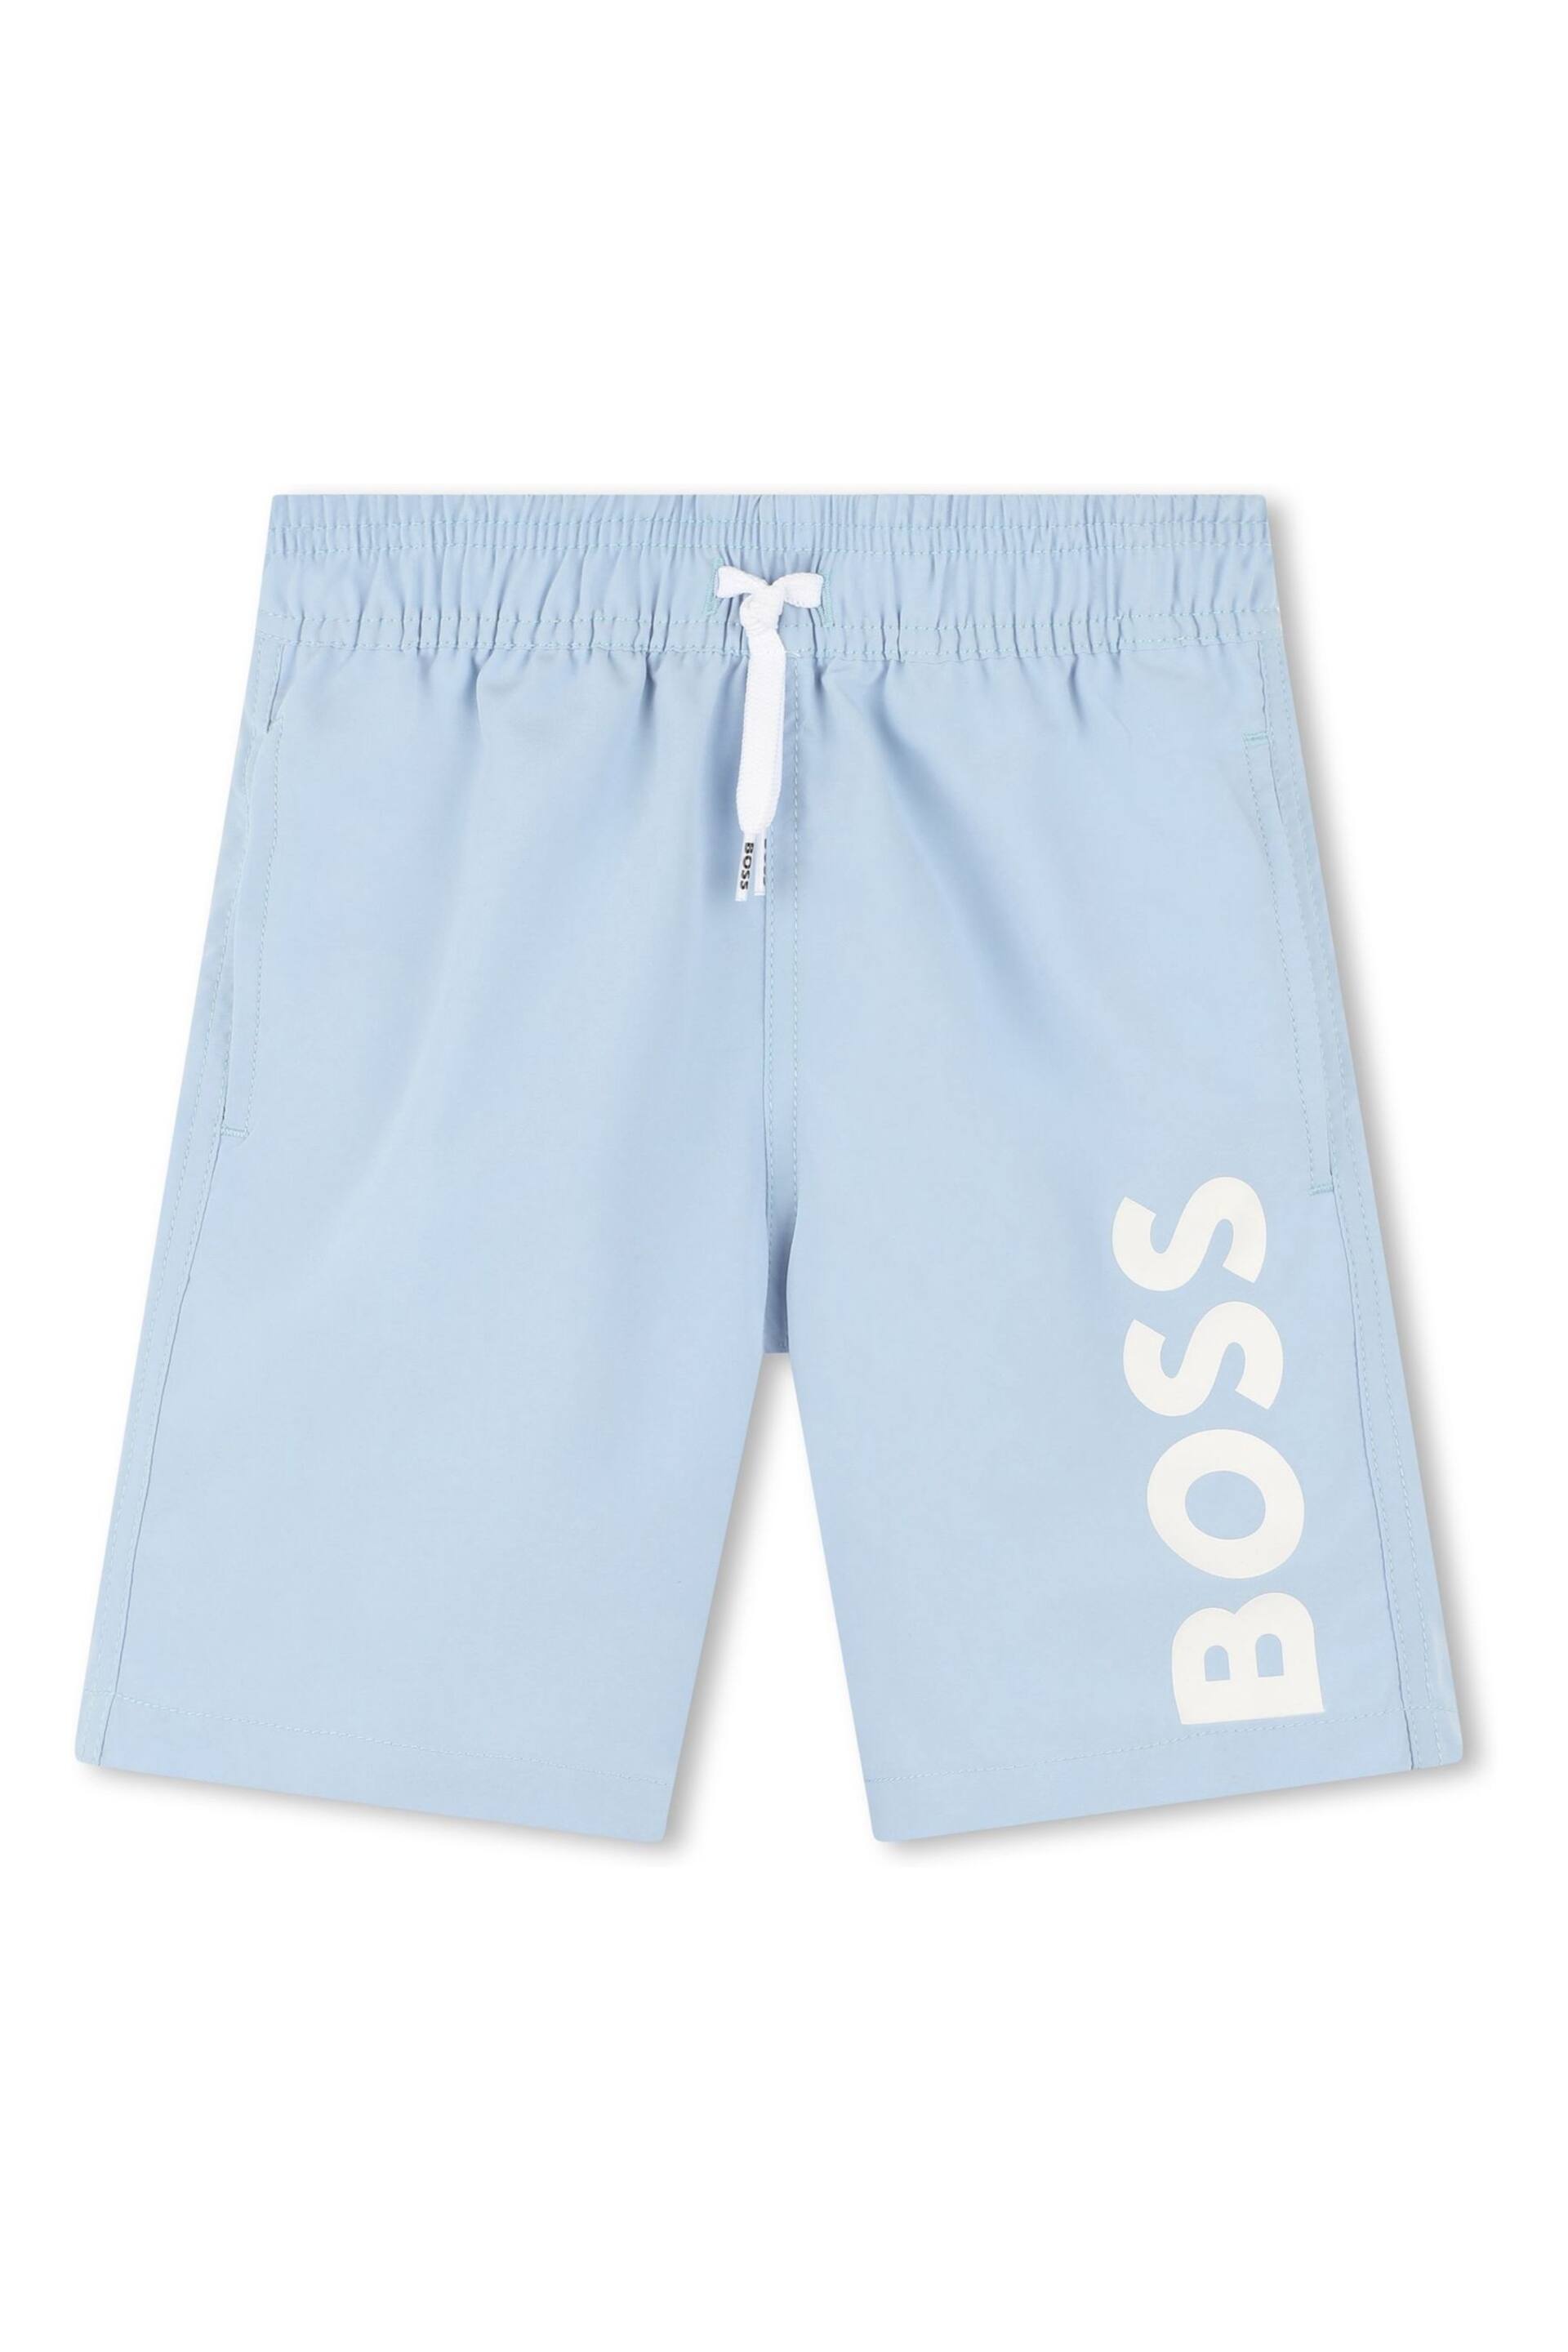 BOSS Ocean Blue Logo Swim Shorts - Image 1 of 2